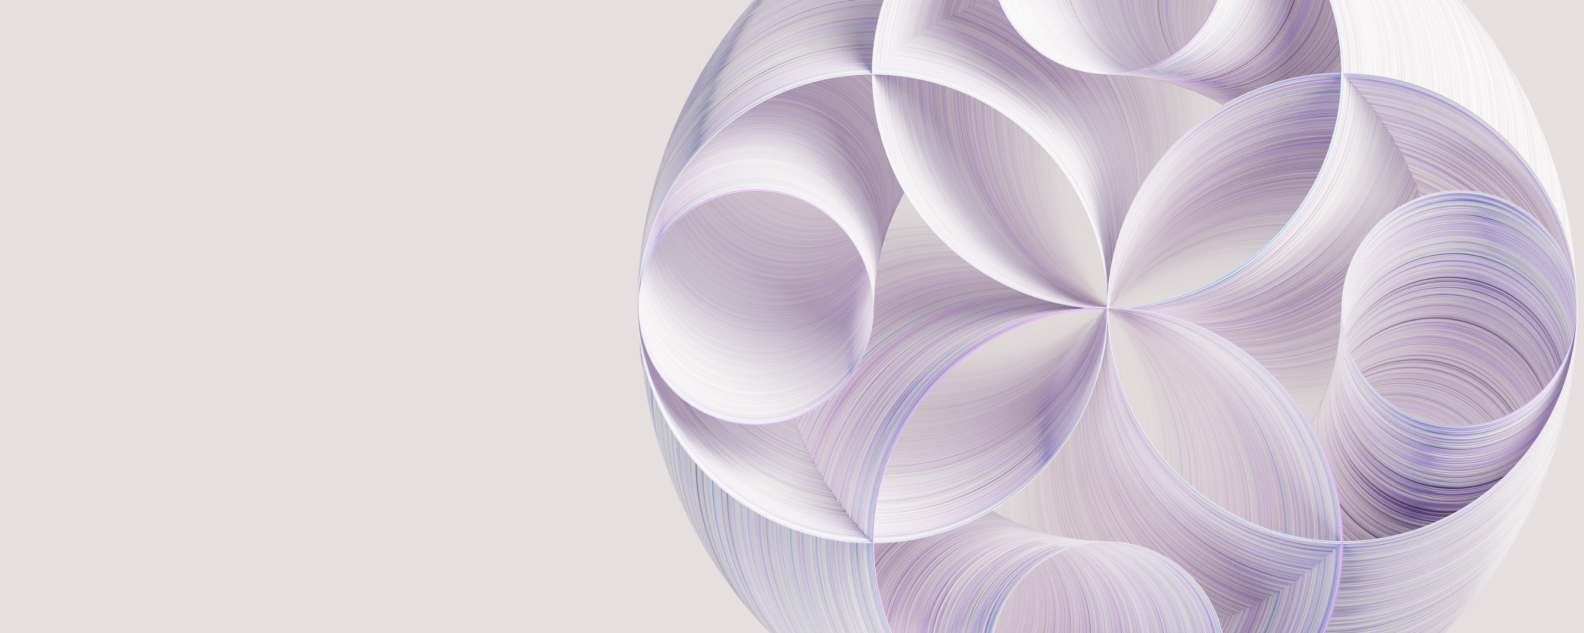 Imagen abstracta de círculos concéntricos morados que se cruzan